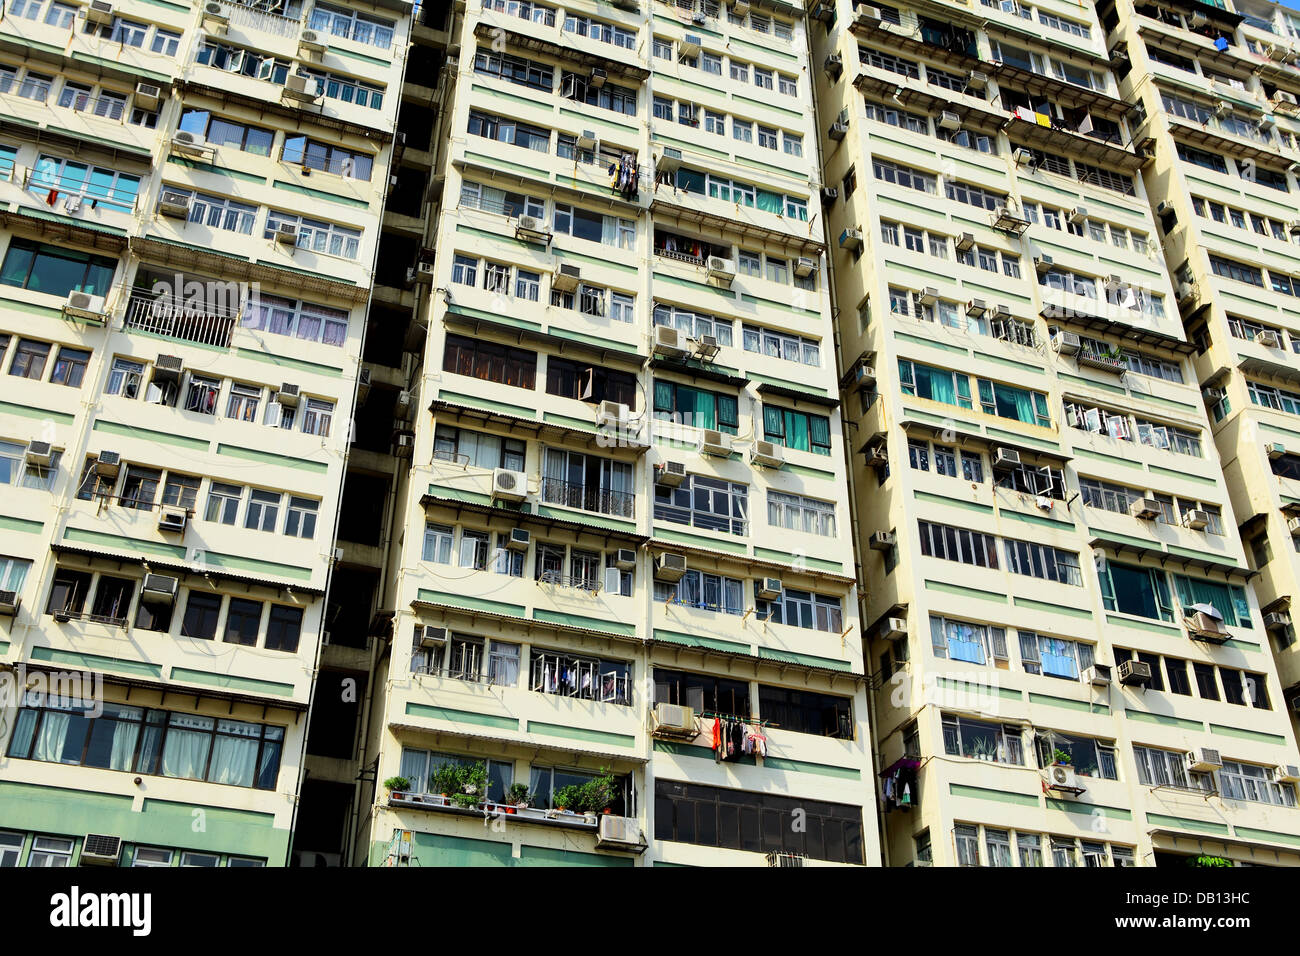 Hong Kong old building Stock Photo - Alamy